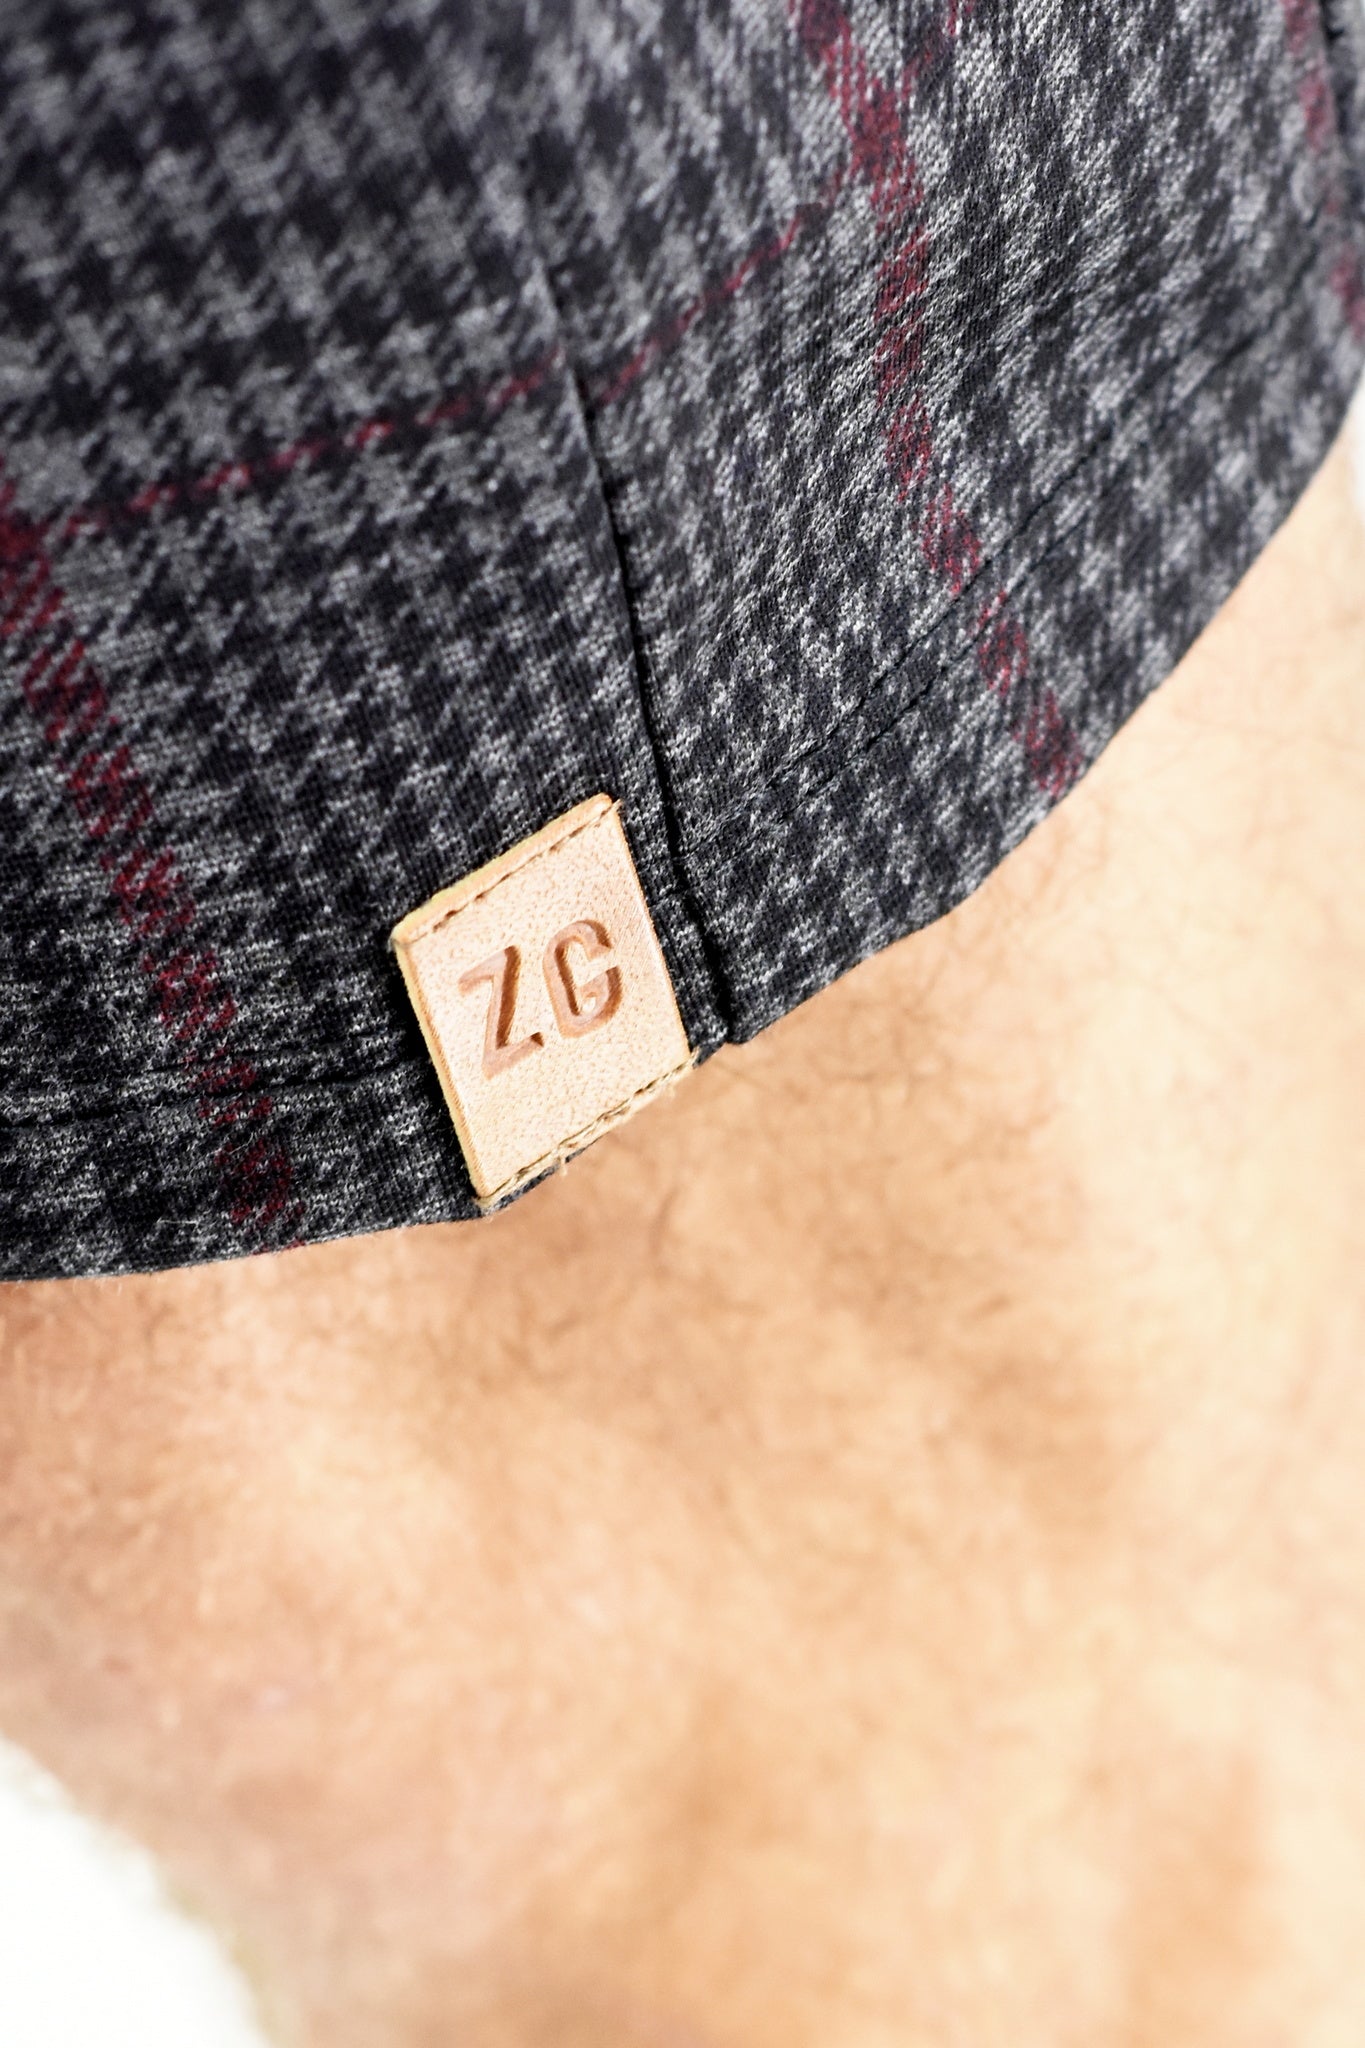 Mens Black/Grey/Red Drawcord shorts with Zip Pocket ZG5509